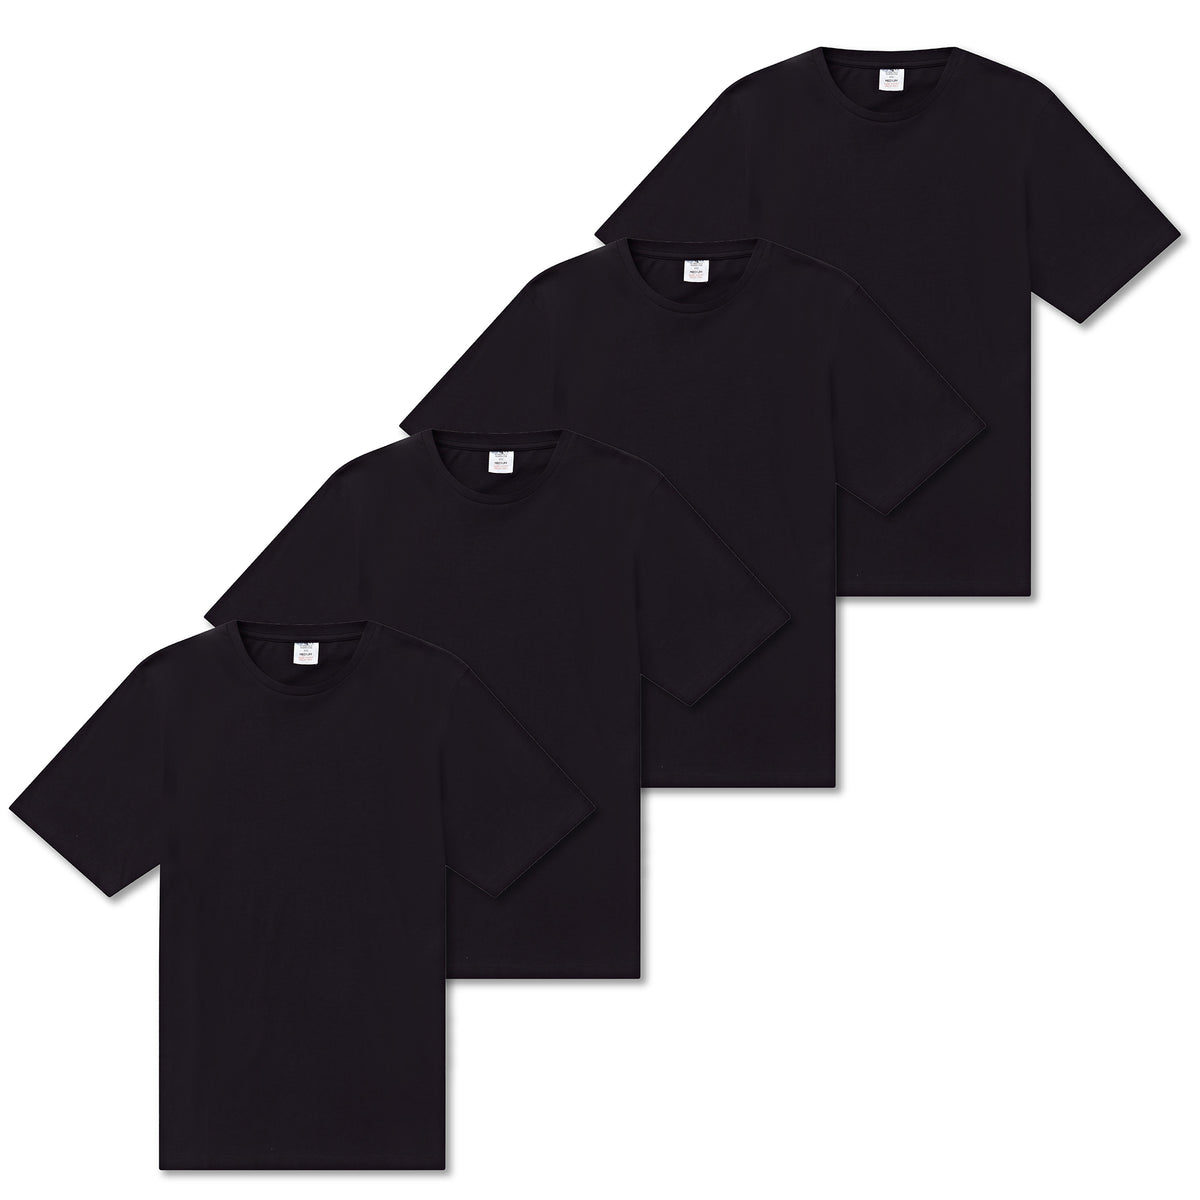 Mens 4 Pack T-Shirt Black